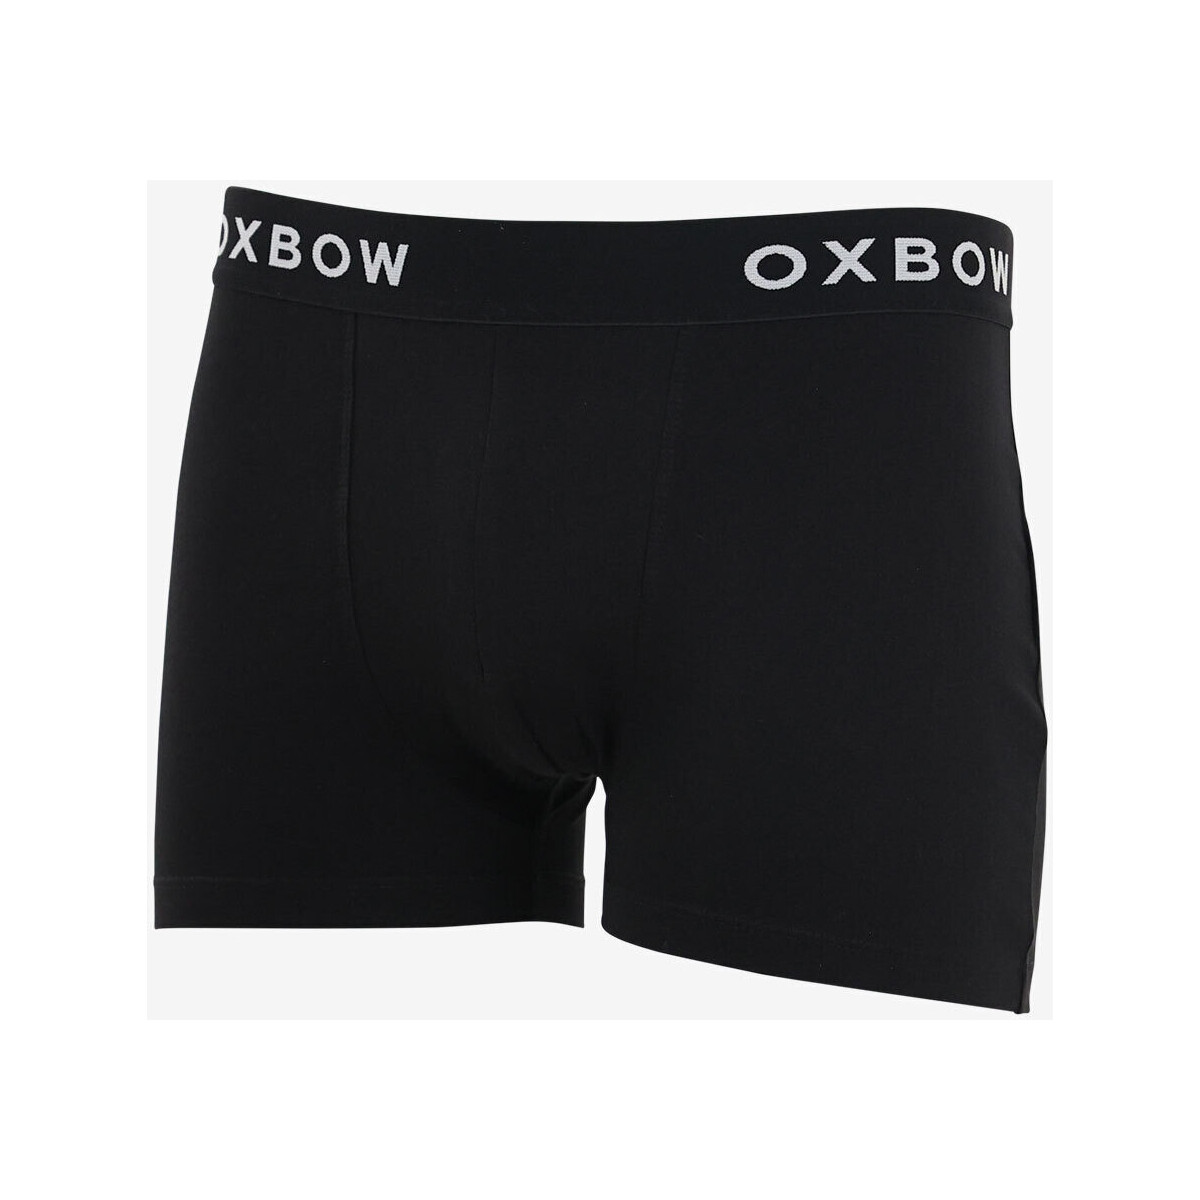 Oxbow Noir Lot de 2 boxers P2CASSIDY VtYWx0vB